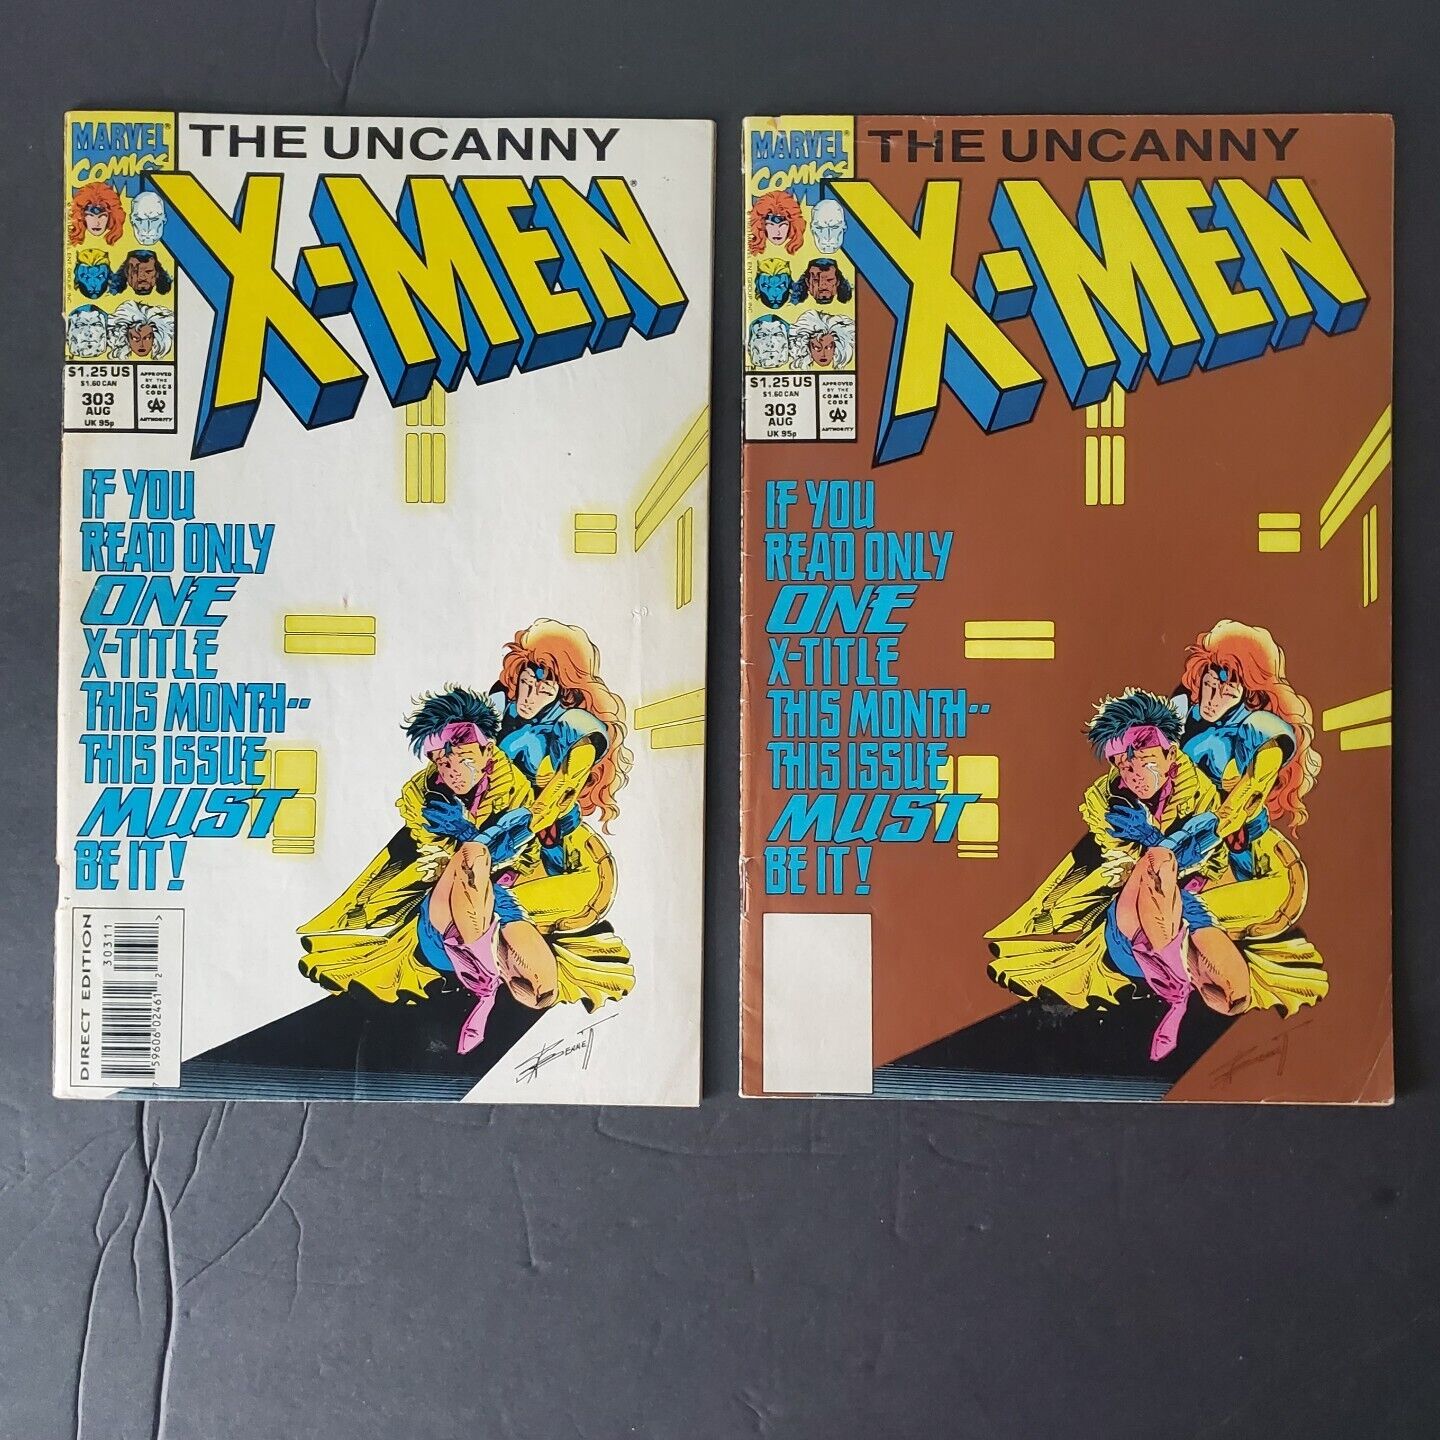 The Uncanny X-Men #303 Gold & White Edition (Marvel, August 1993)